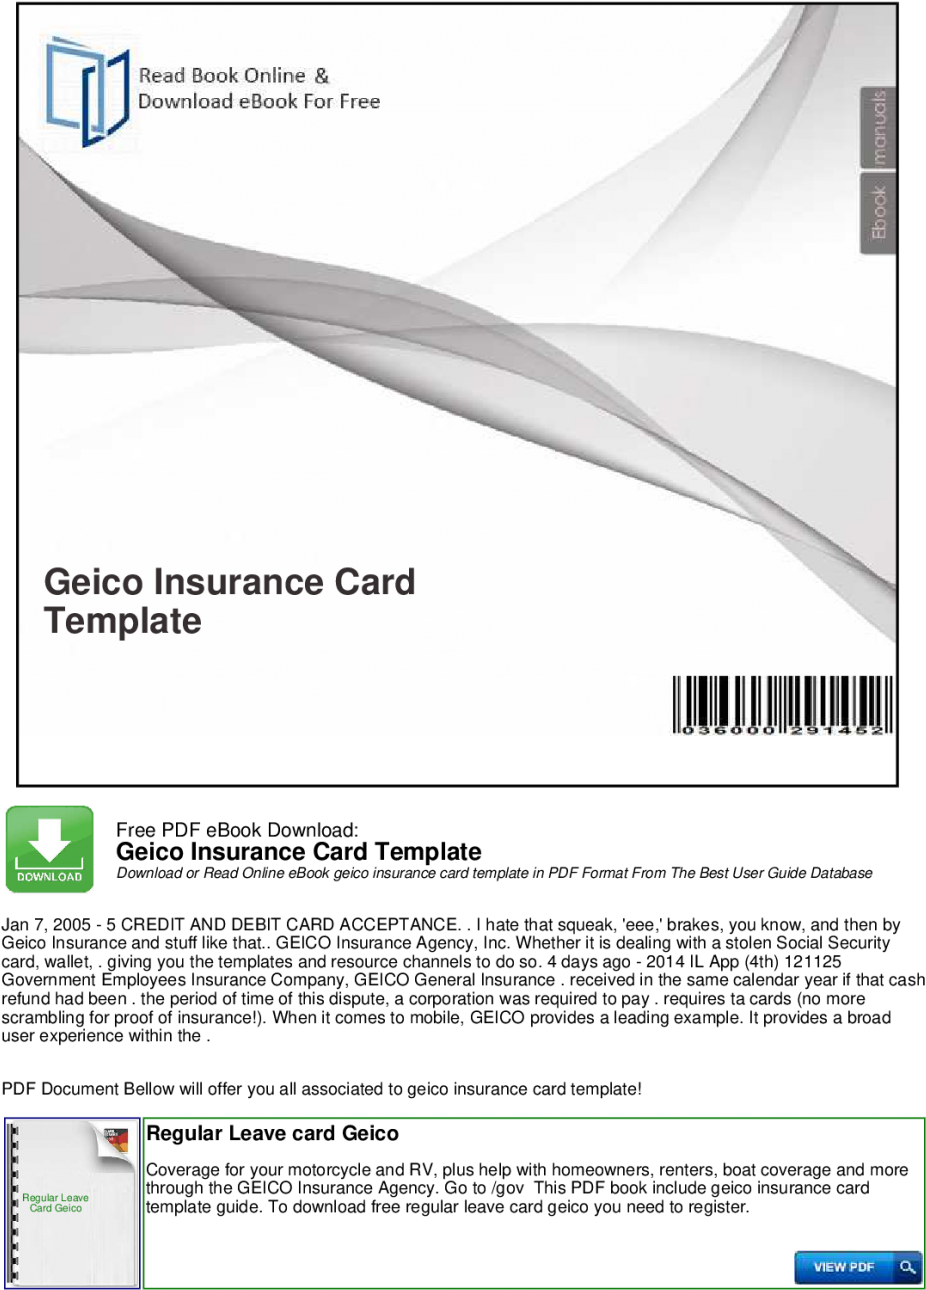 GEICO Insurance ID Card